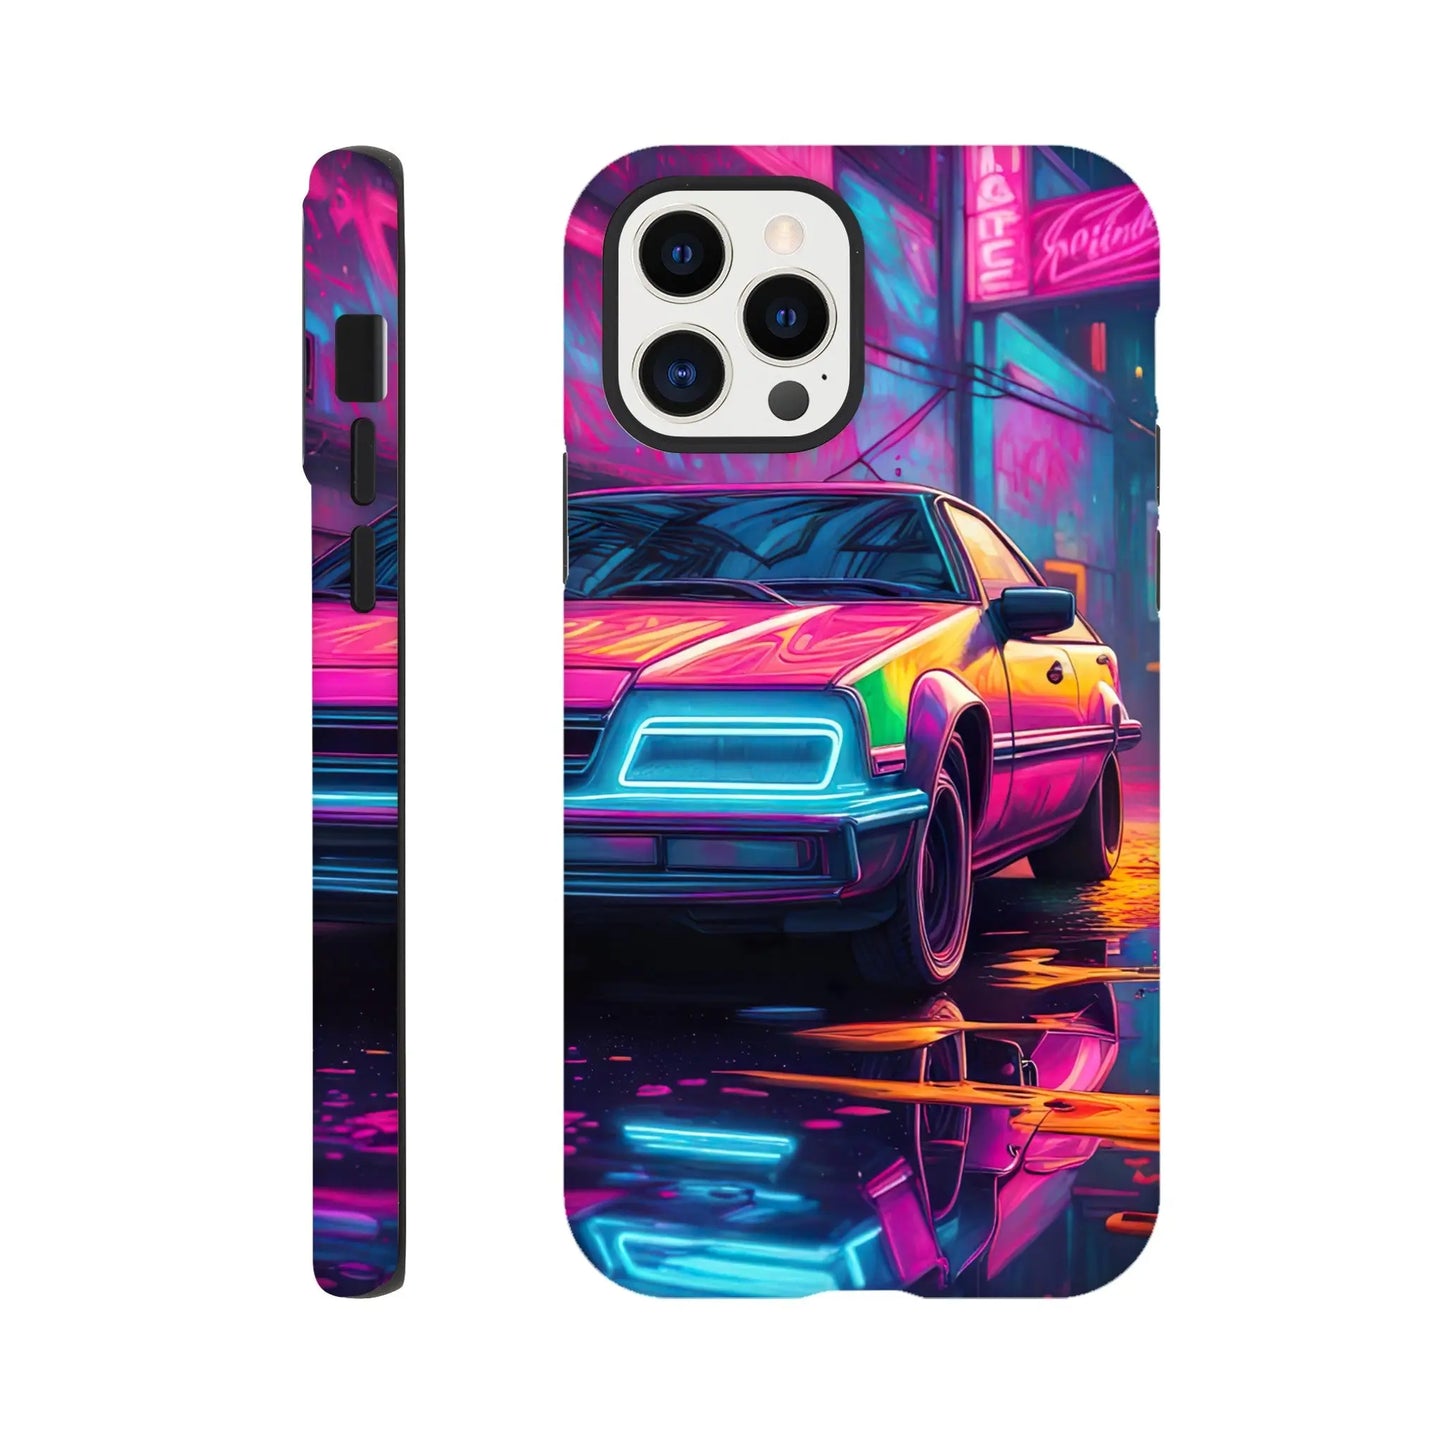 Smartphone-Hülle "Hart" - Retro Auto - Neon Stil, KI-Kunst RolConArt, Neon, iPhone-12-Pro